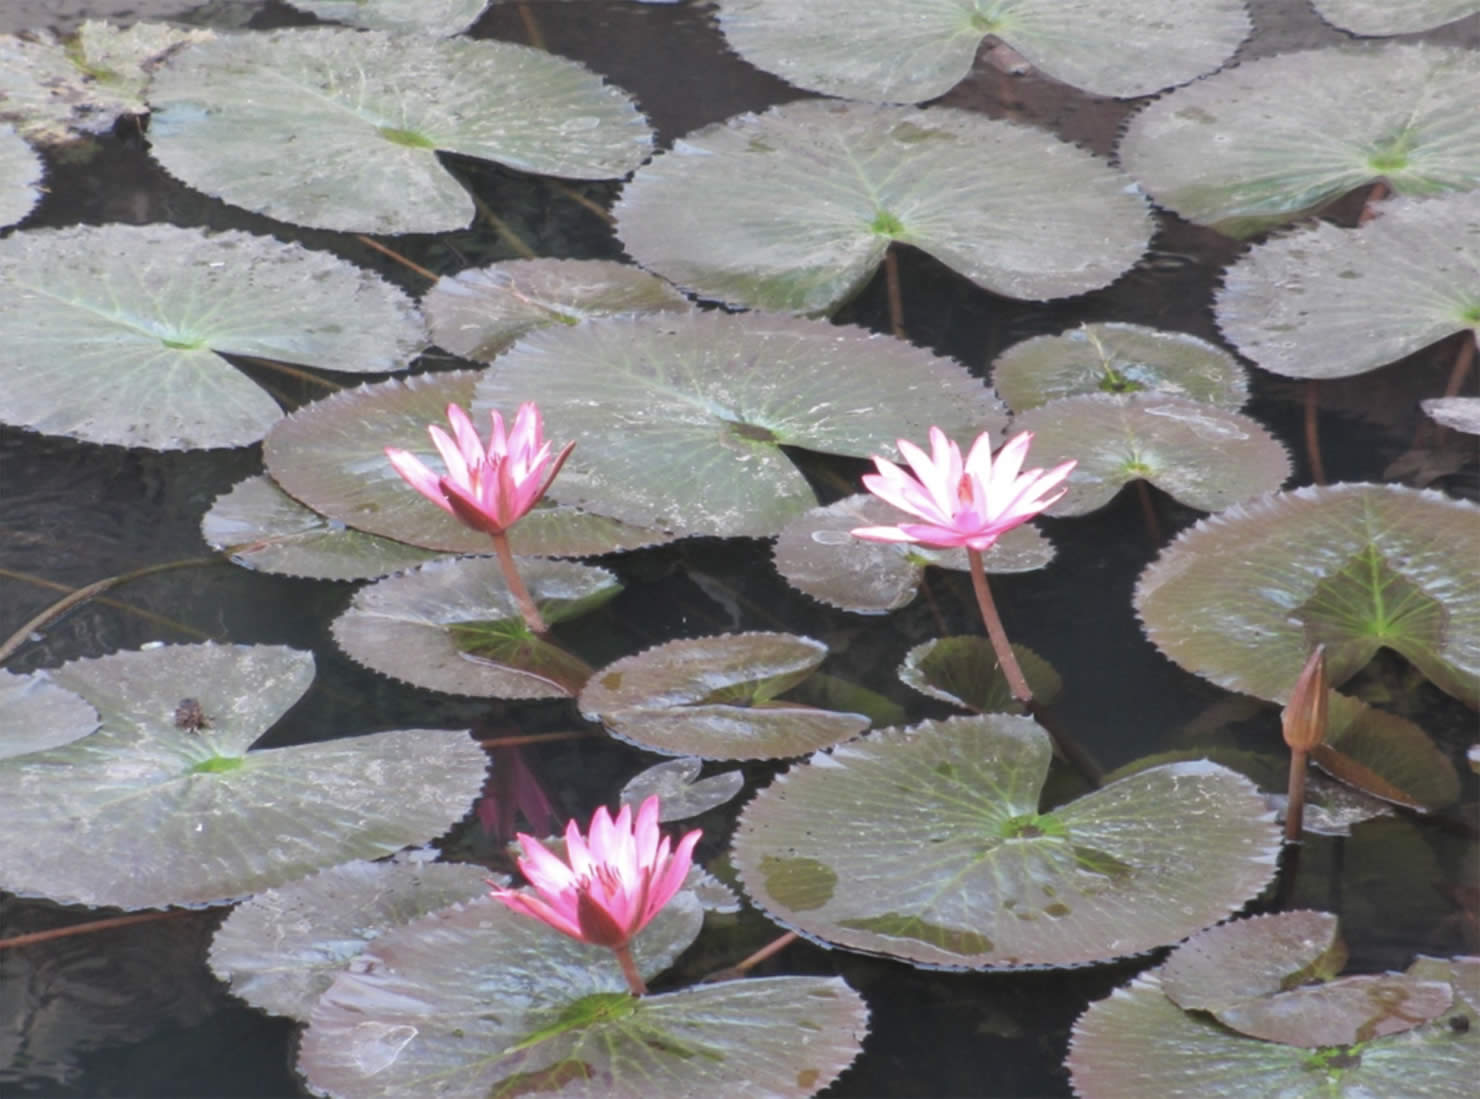 Local lotus growing in ponds near path in Mayapura